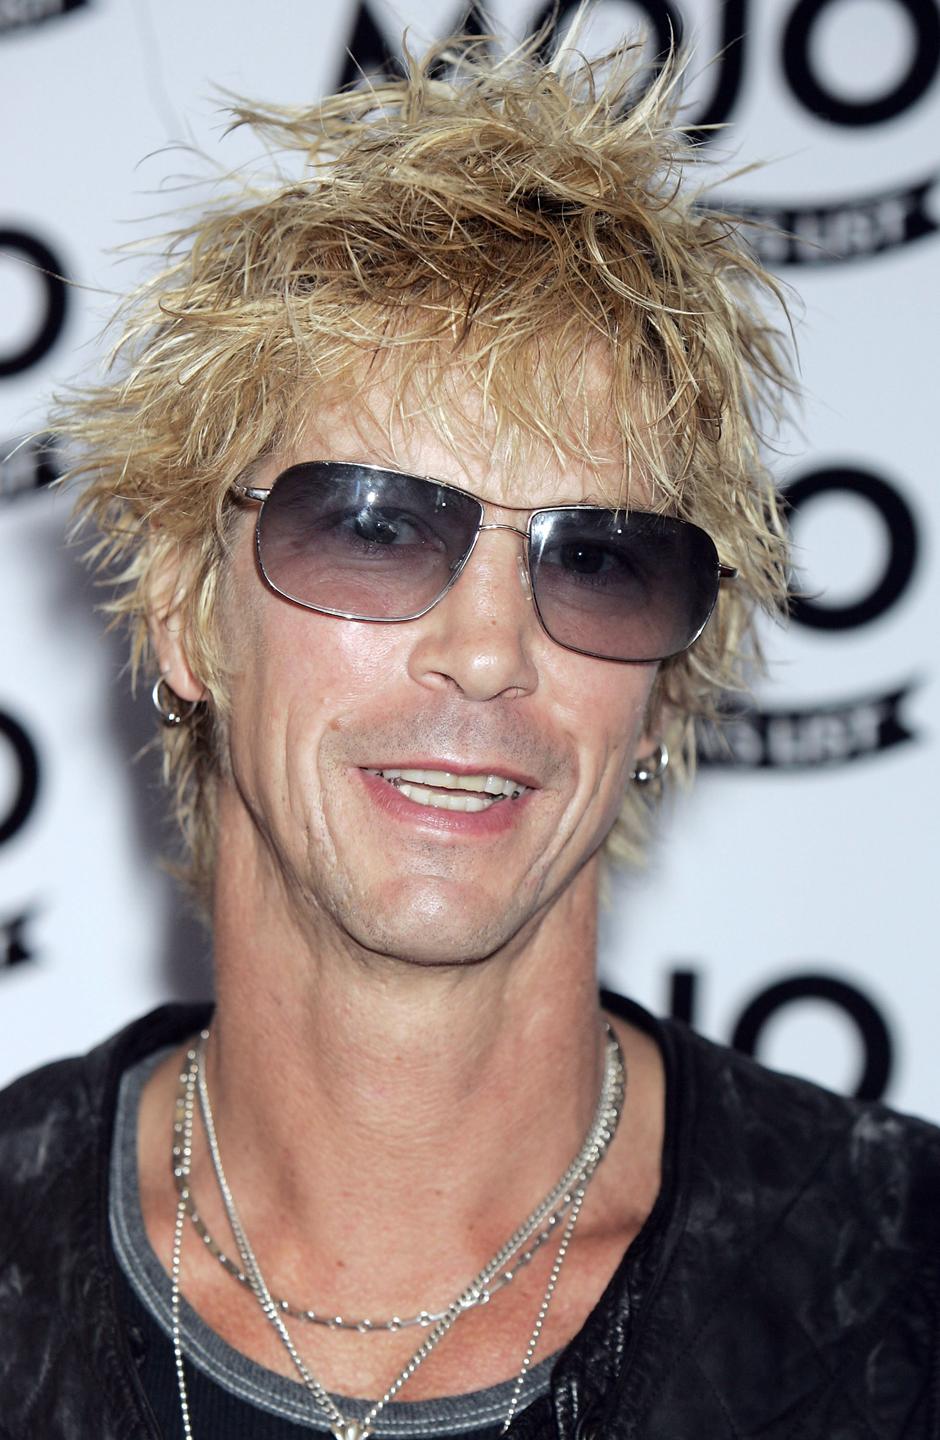 Michael “Duff” McKagan iz Guns N' Roses | Author: Press Association/PIXSELL